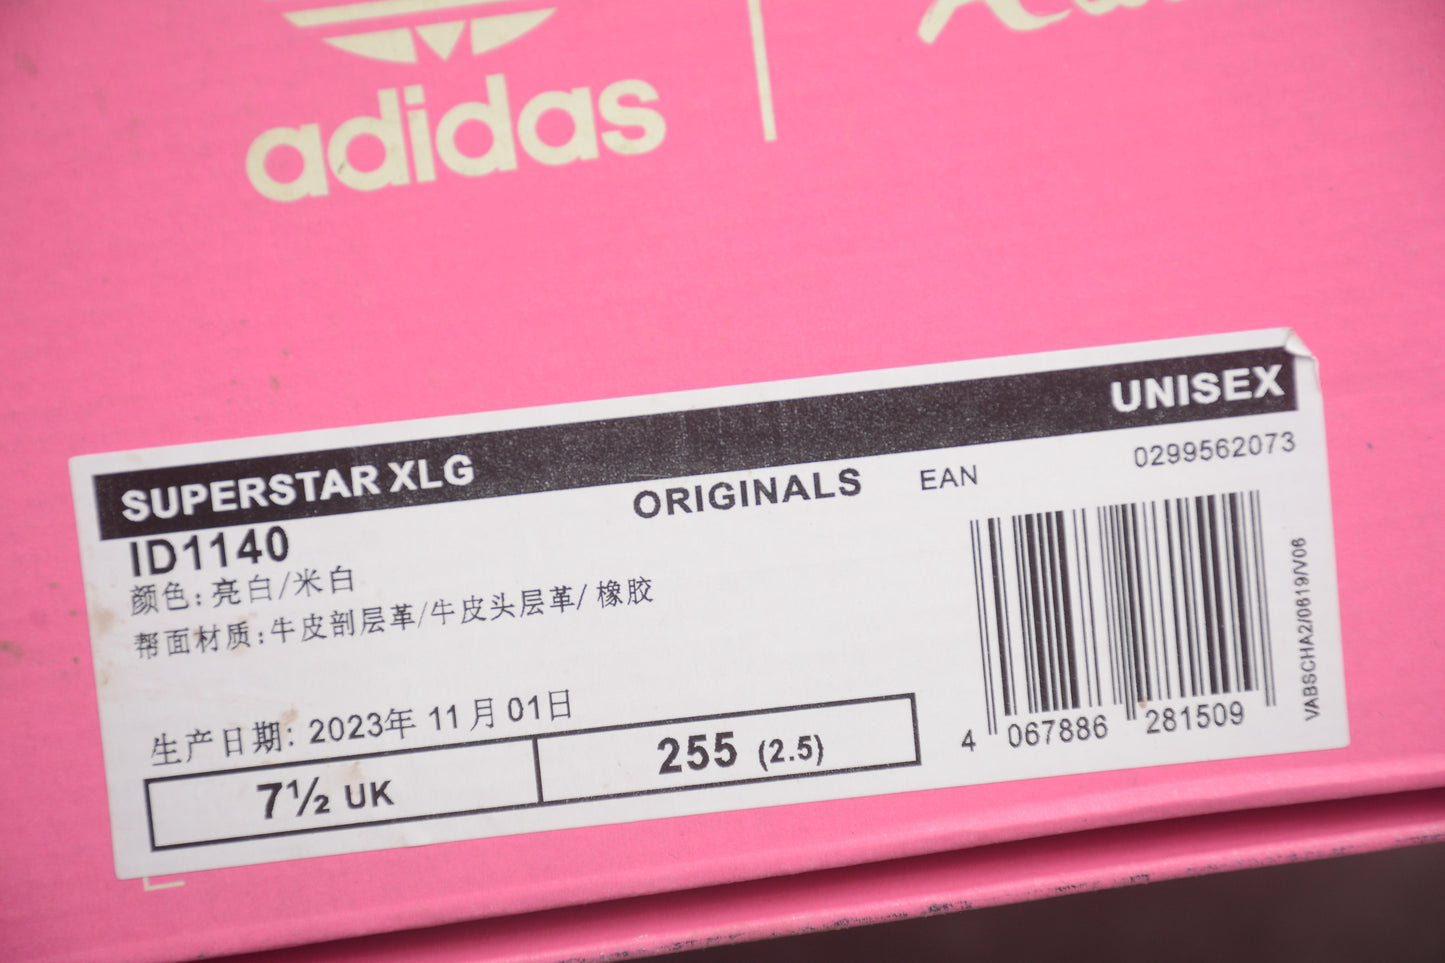 Adidas Originals Superstar XLG